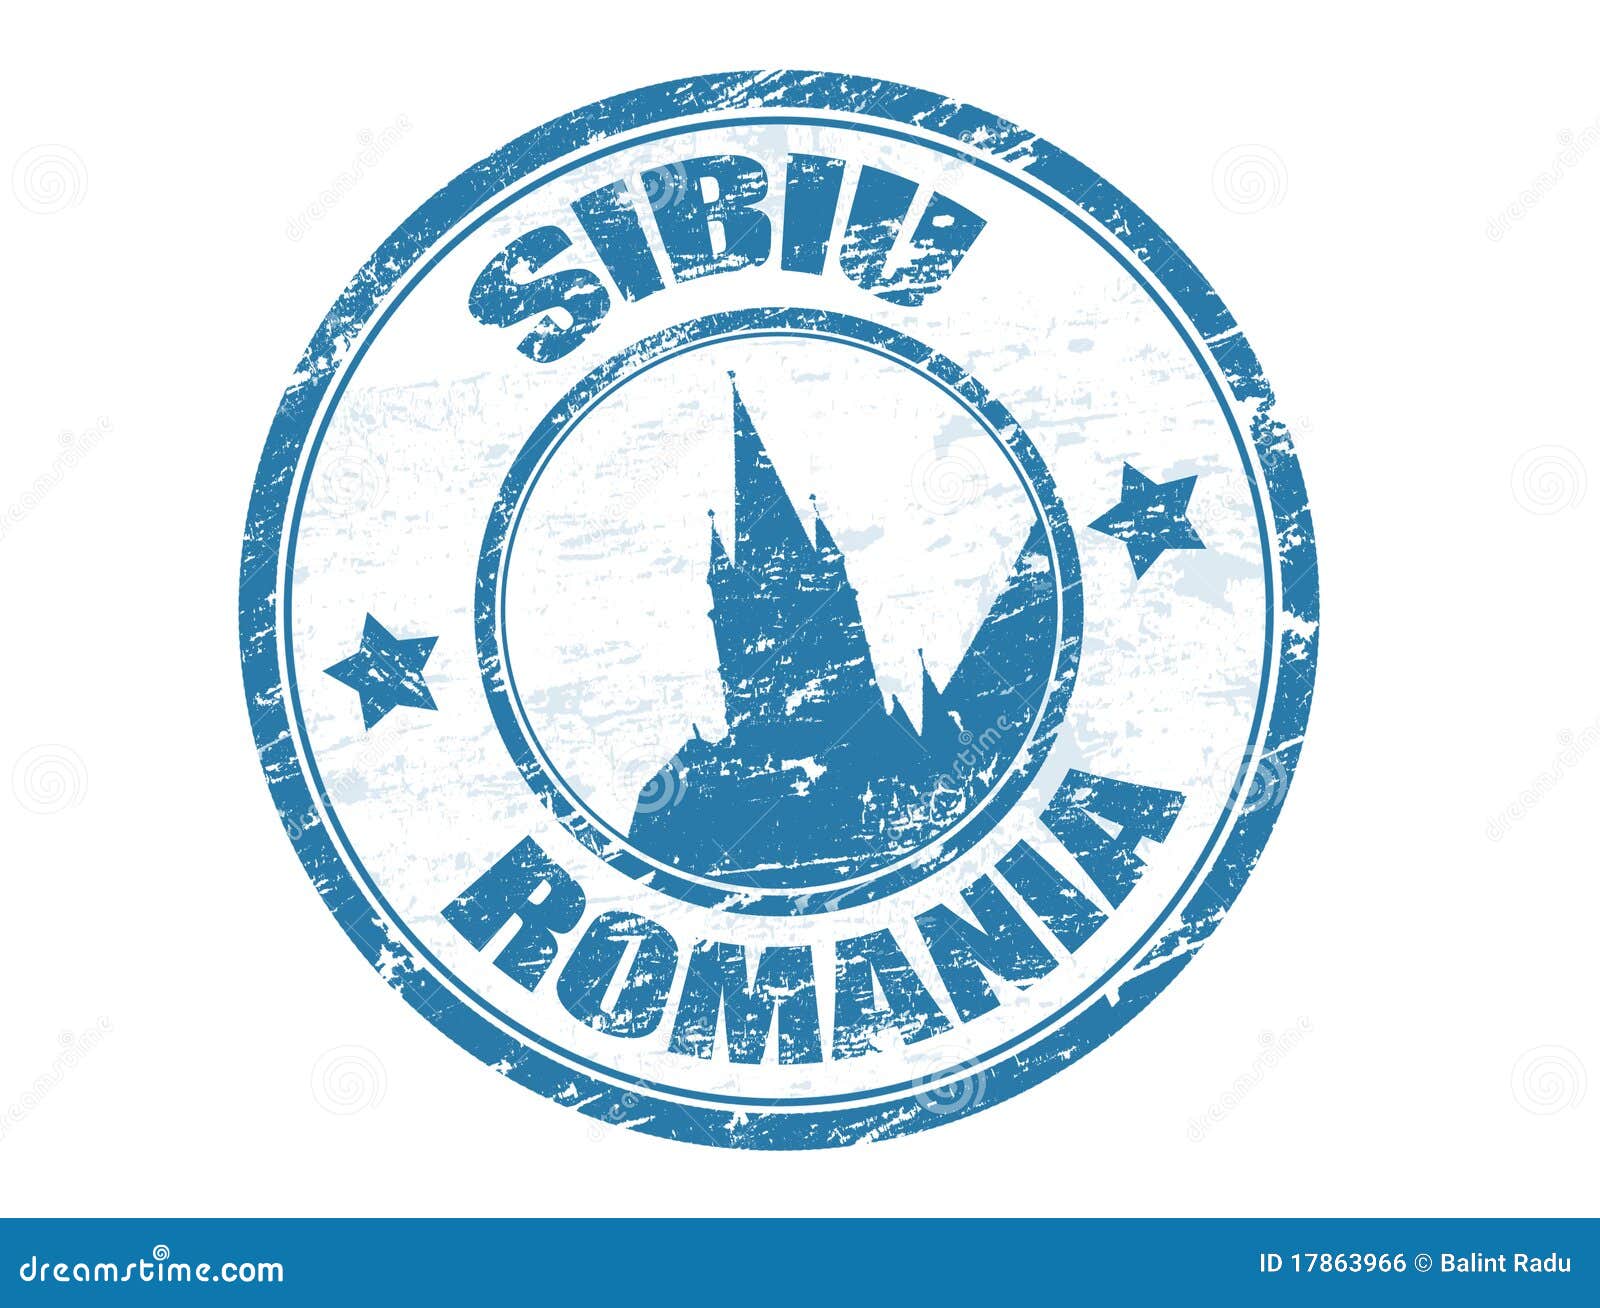 Sibiu Hermannstadt - License, download or print for £21.08